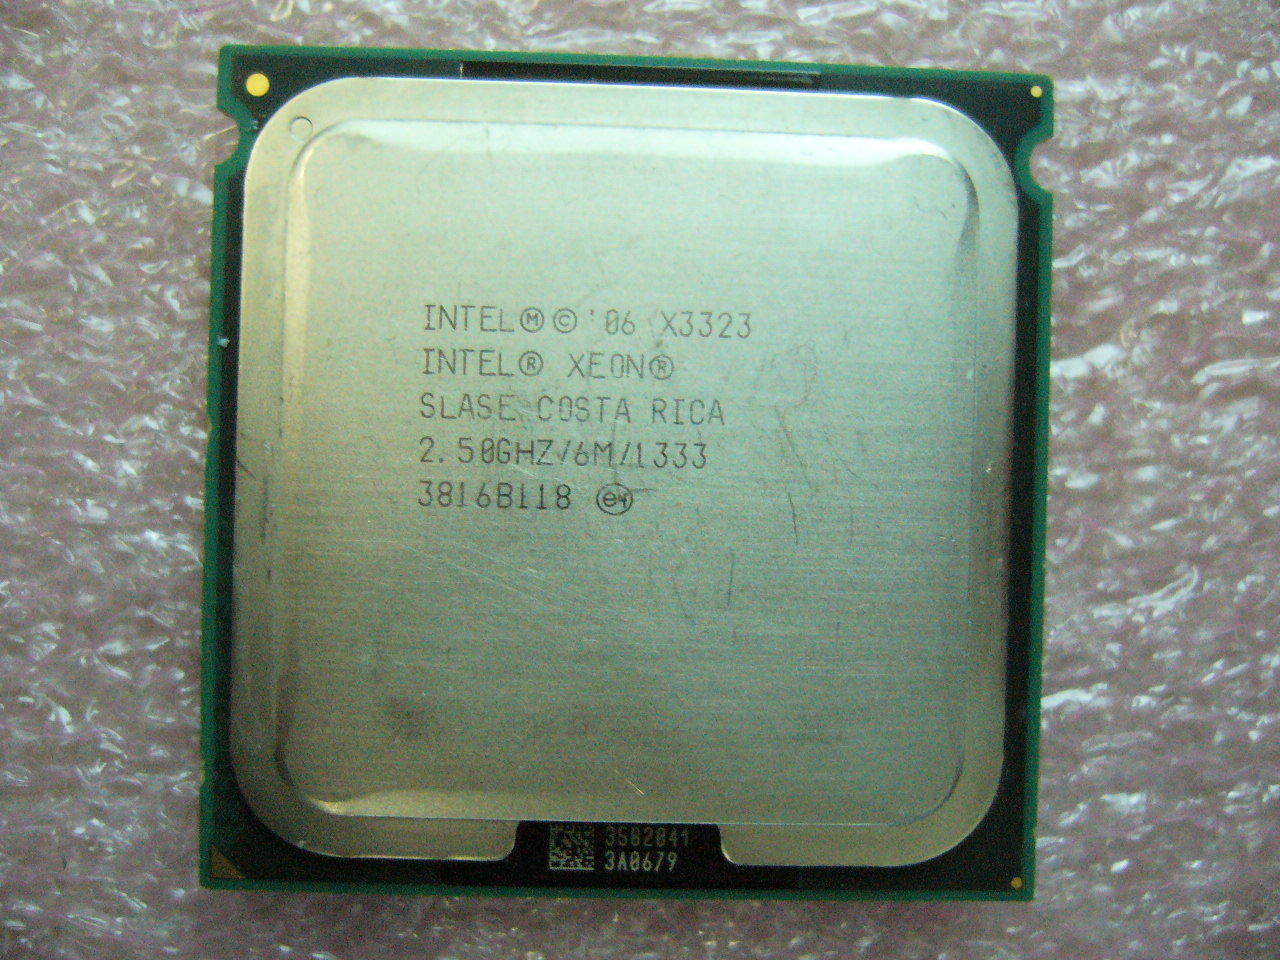 QTY 1x Intel Xeon CPU Quad Core X3323 2.50Ghz/6MB/1333Mhz LGA771 SLASE SLBC5